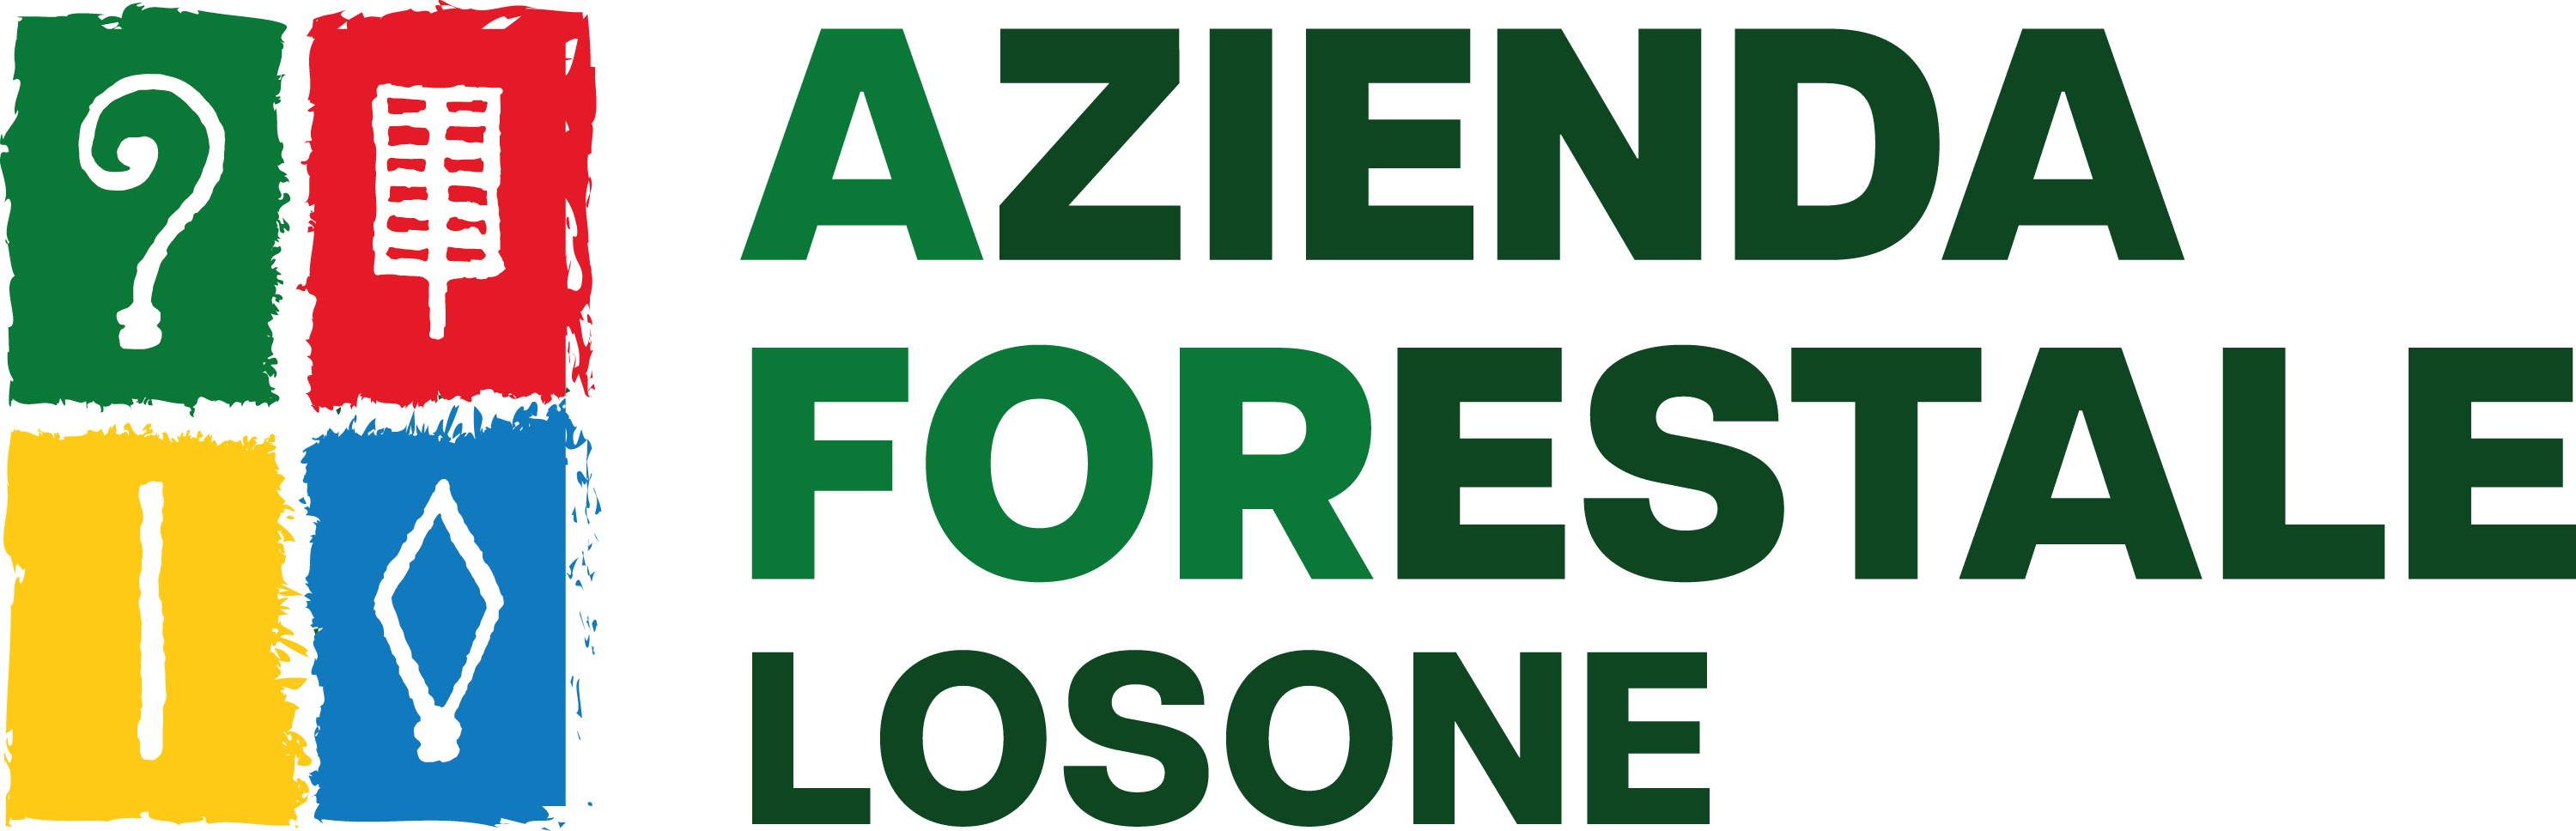 Summer Carnival: Logo sponsor Azienda Forestale Losone